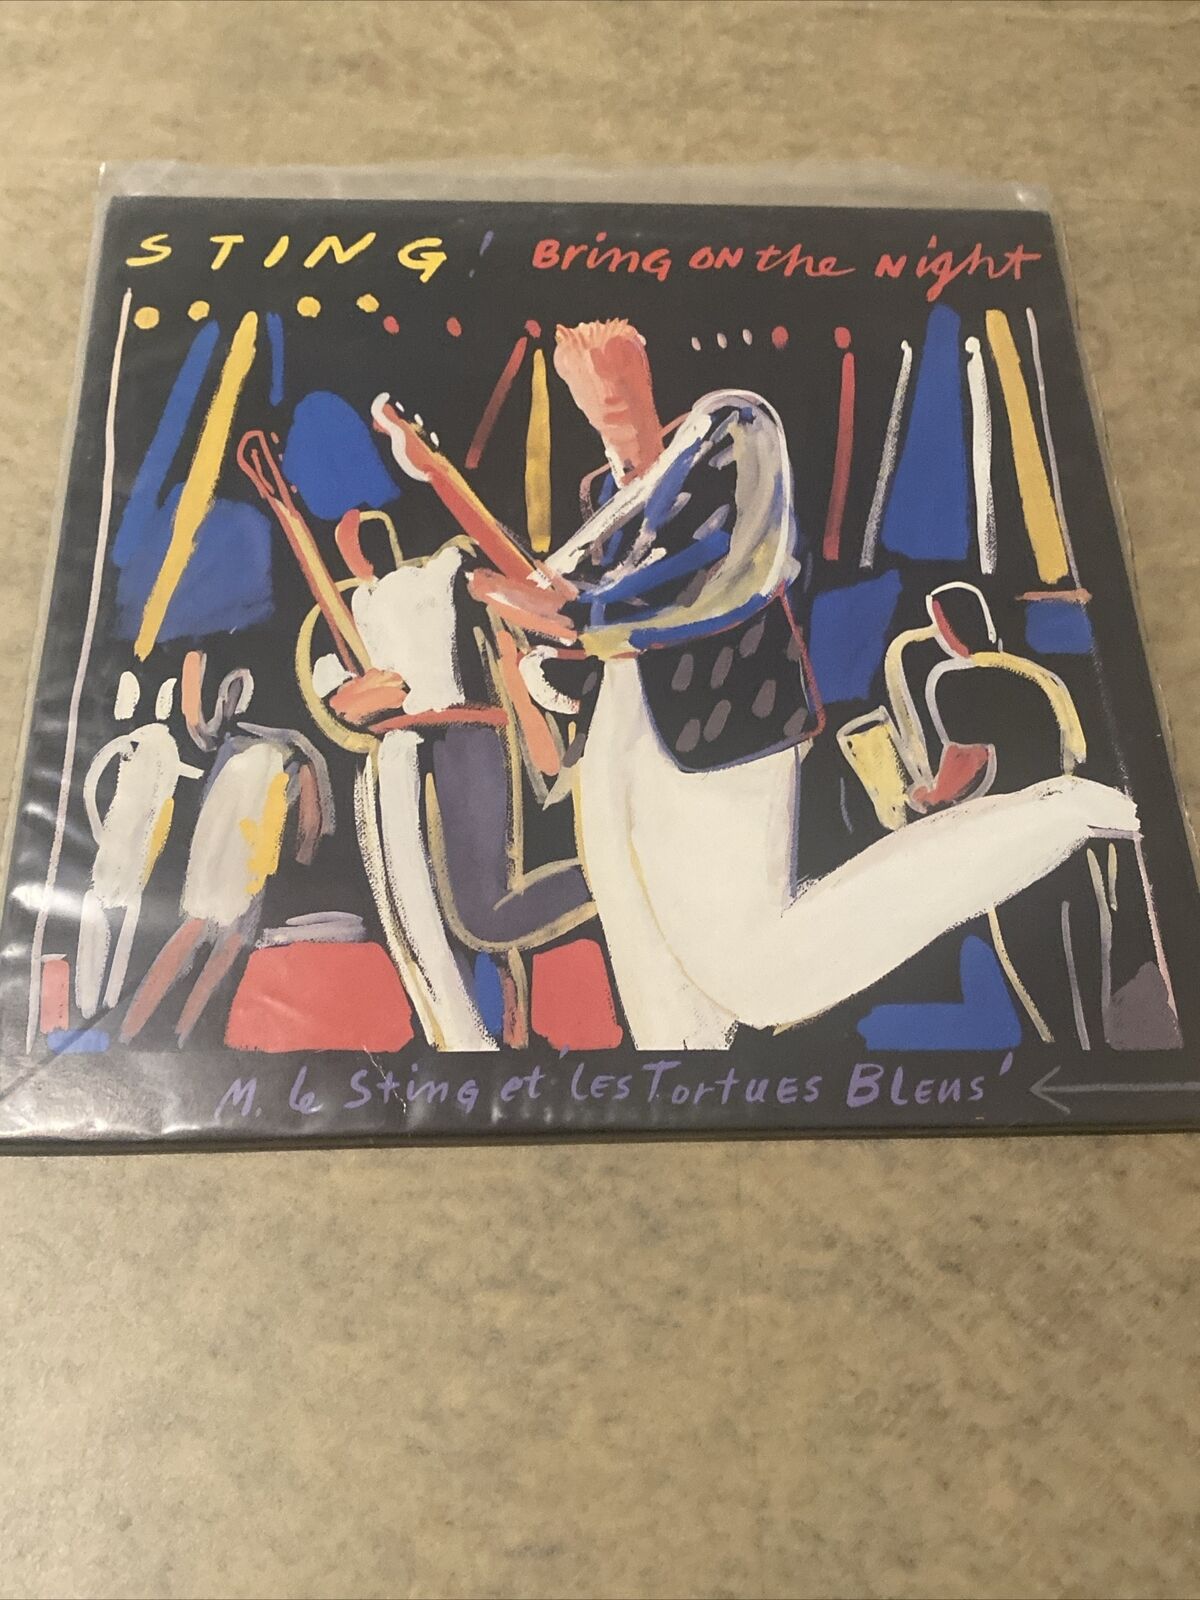 Sting Bring on the Night 2 LP Vinyl Record Album 1986 A&M Jazz Rock